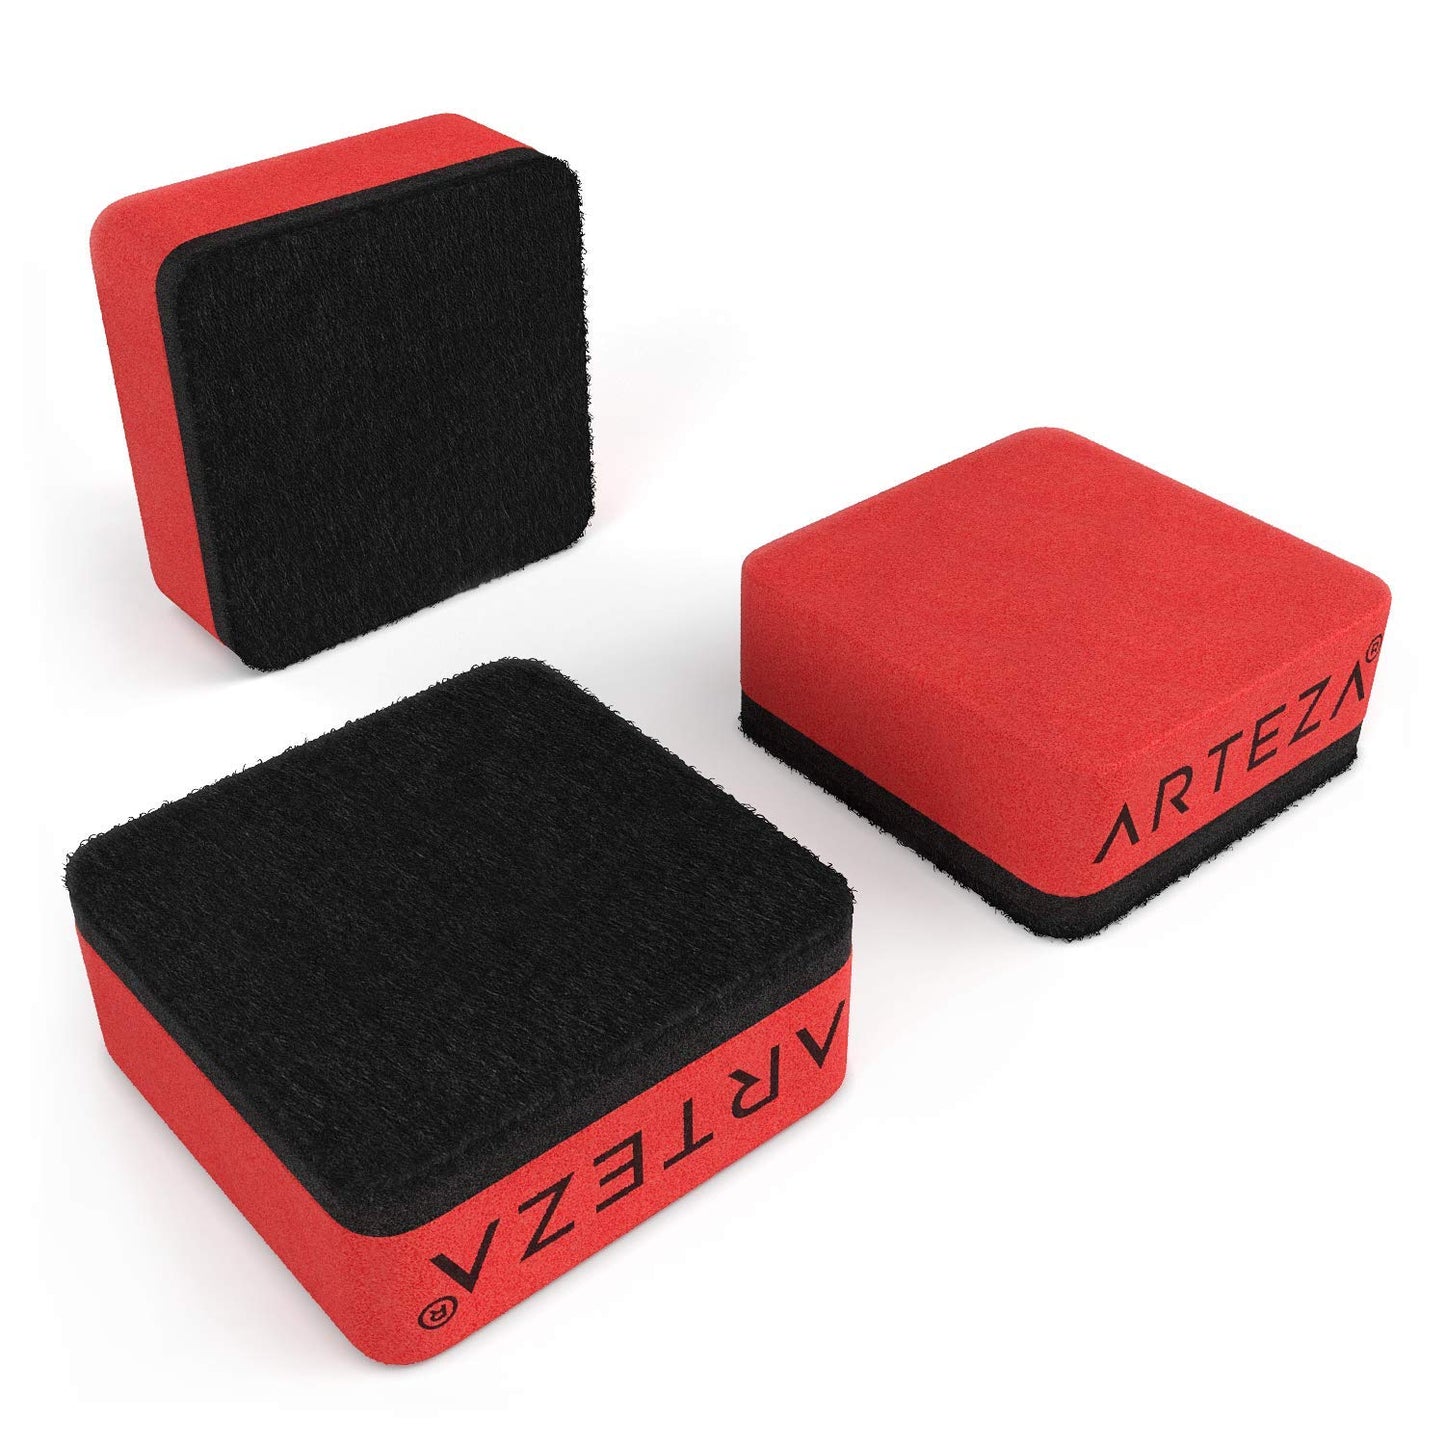 Arteza Magnetic Board Erasers - Set of 20